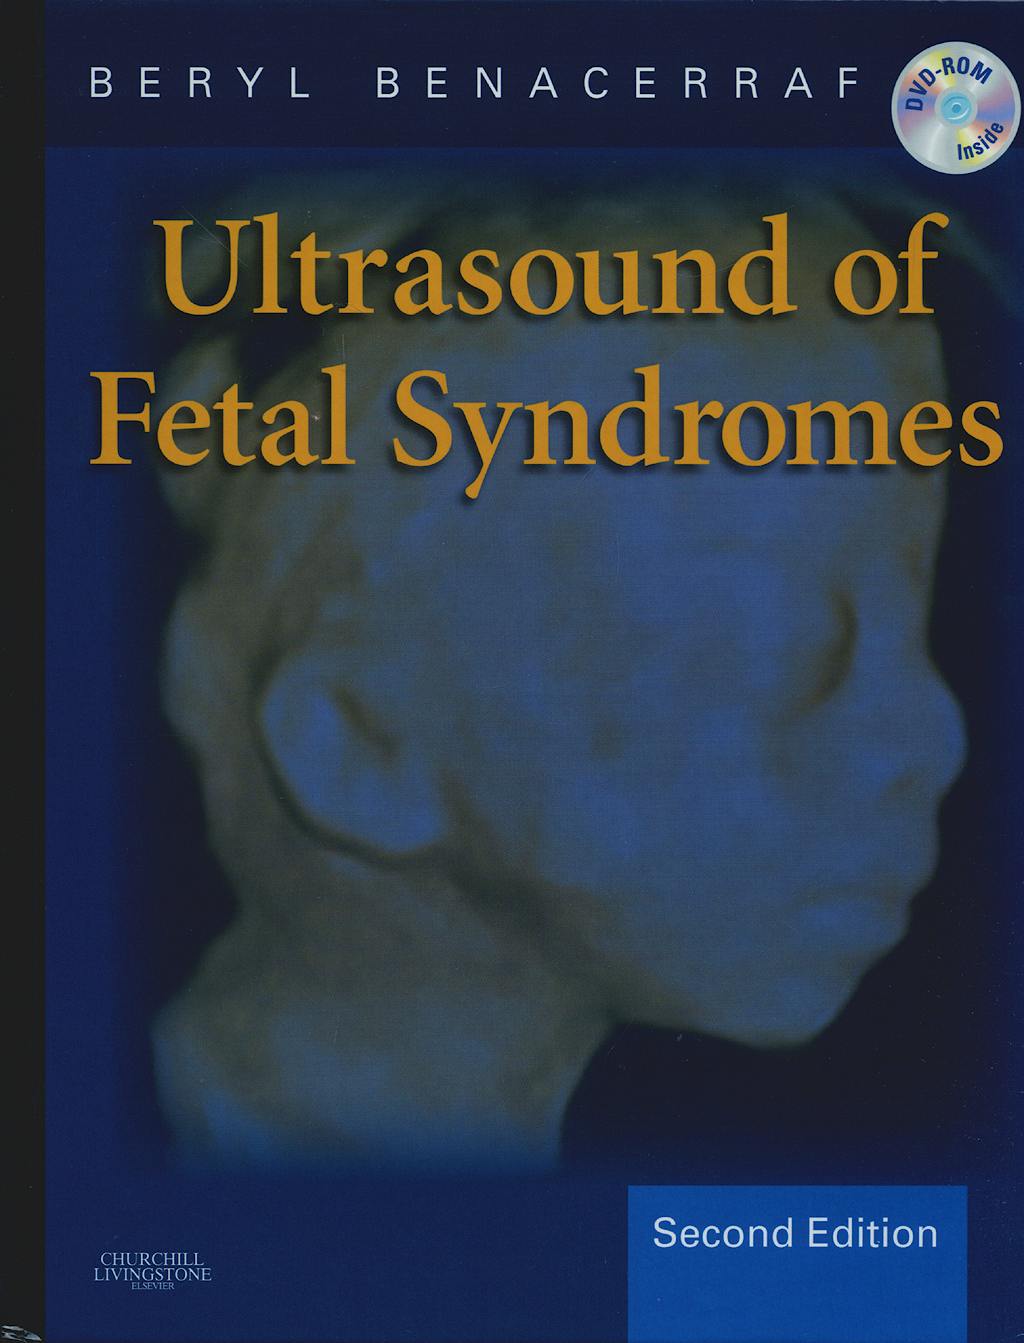 Portada del libro 9780443066412 Ultrasound of Fetal Syndromes